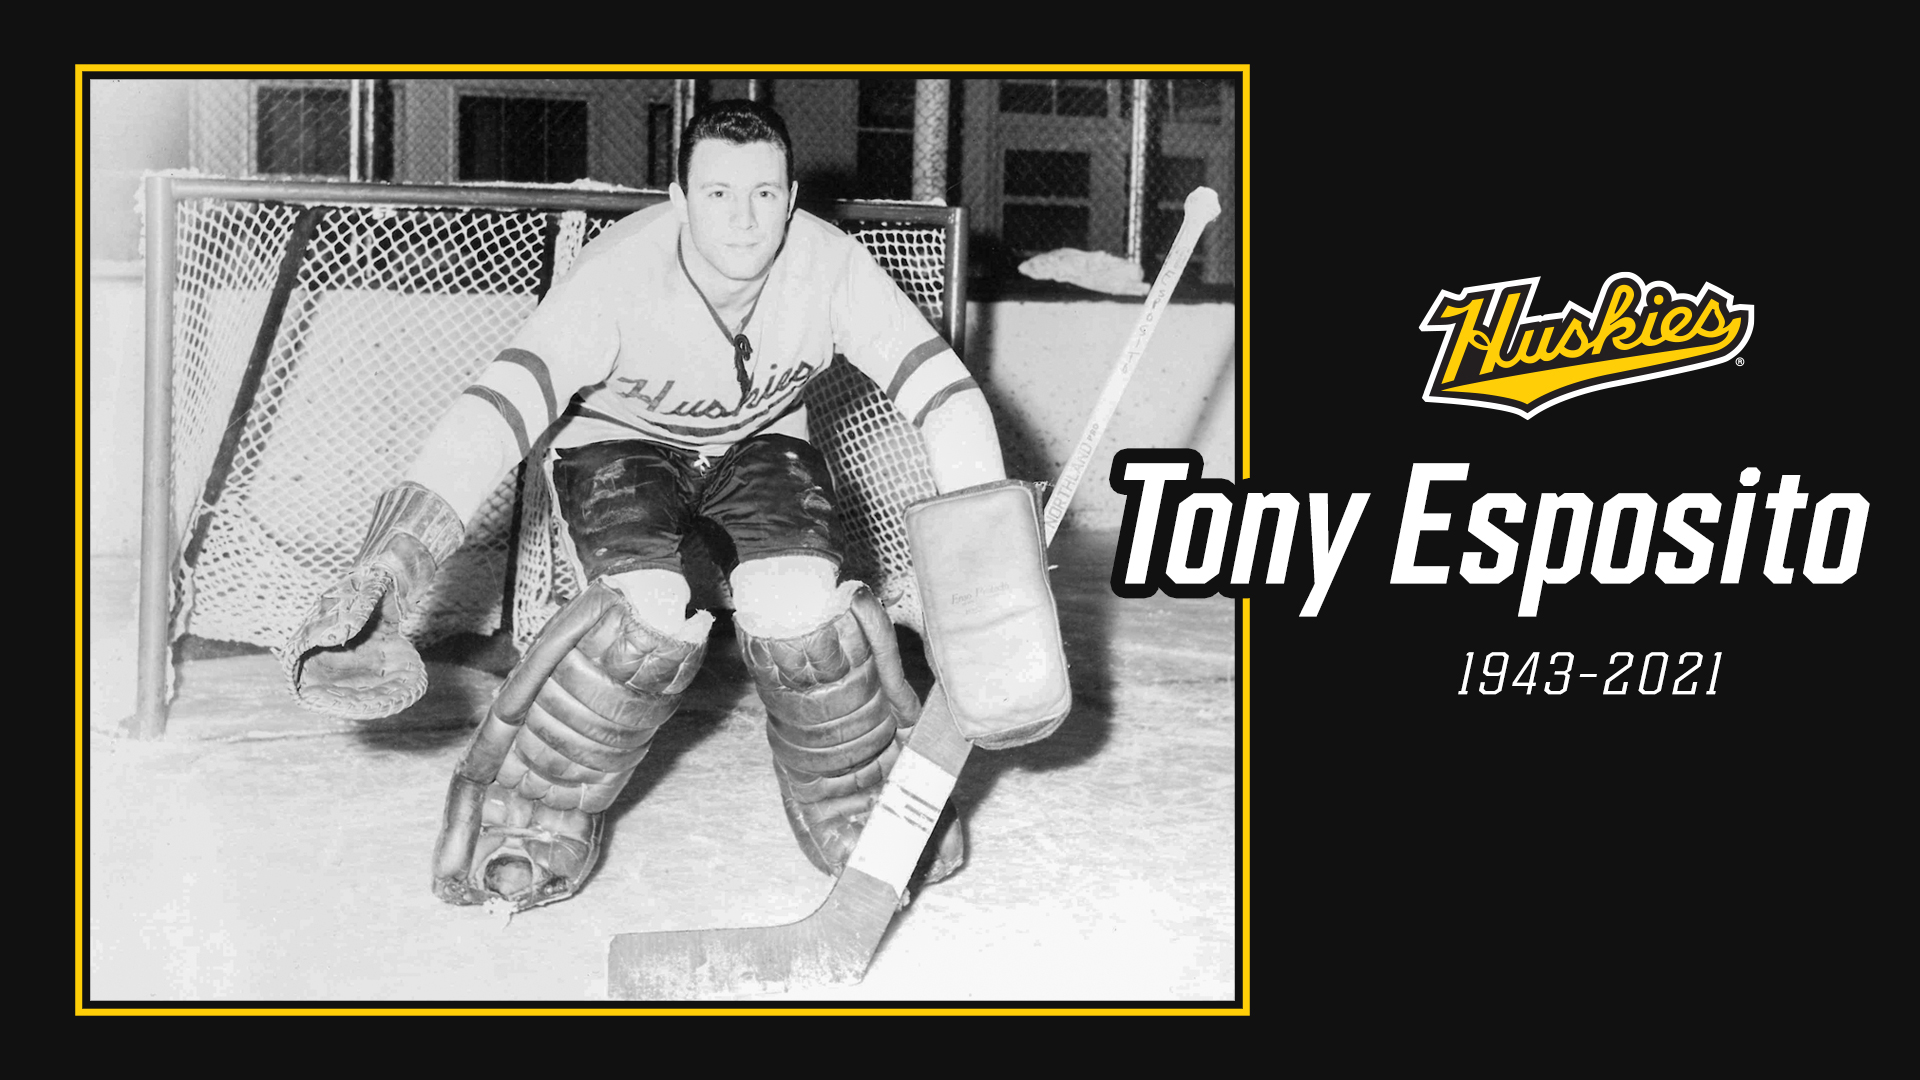 Chicago Blackhawks Hall of Fame goaltender Tony Esposito dies at 78